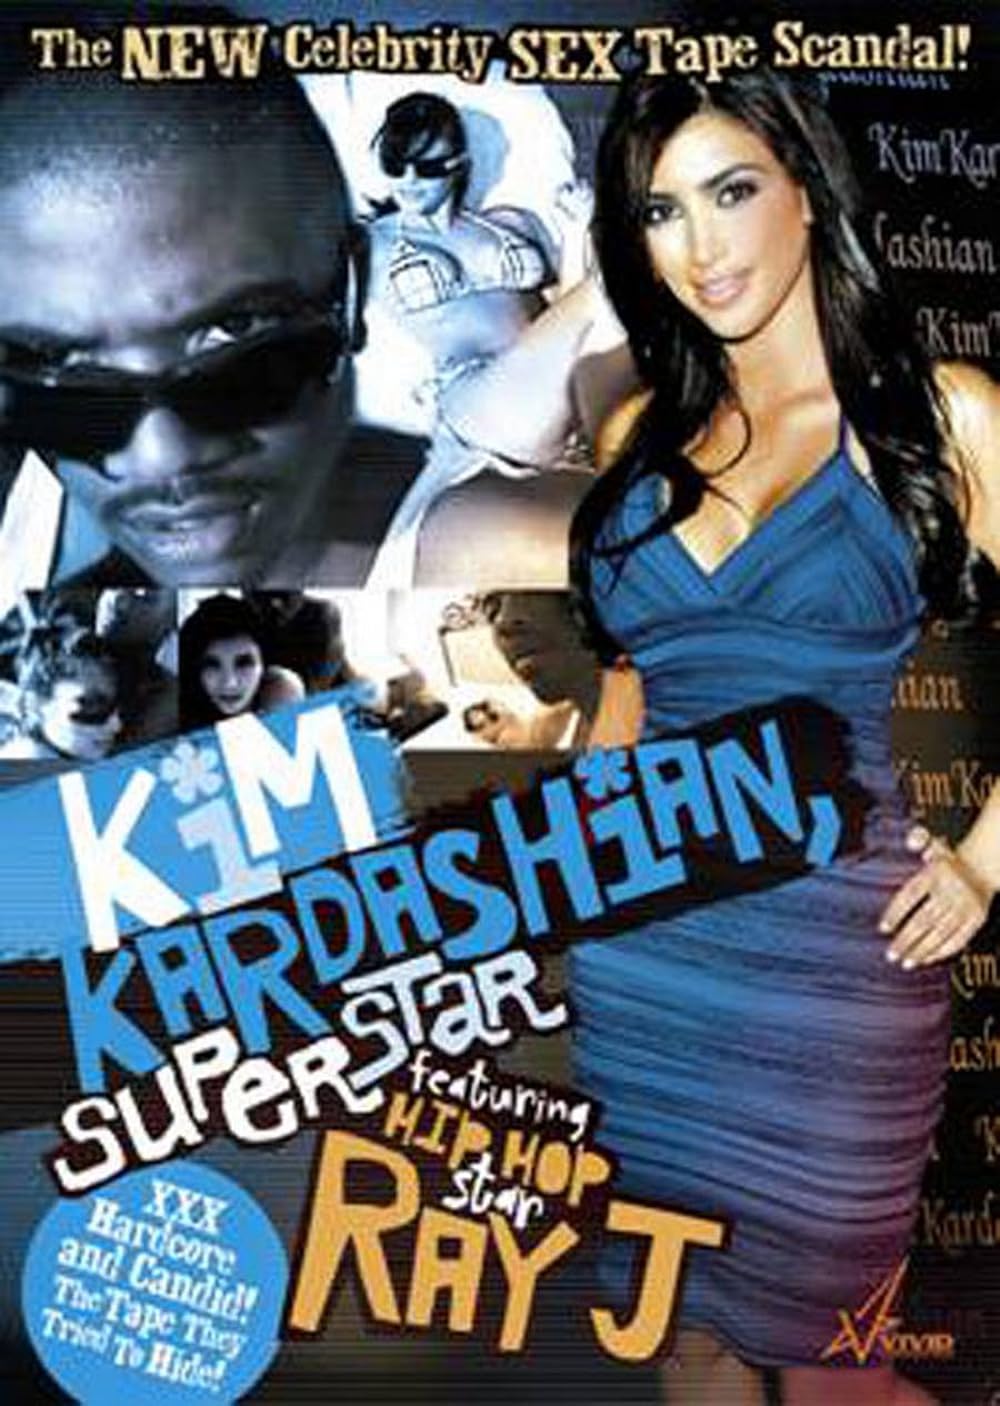 chris taglianetti recommends Kim Kardashian And Ray Sex Video